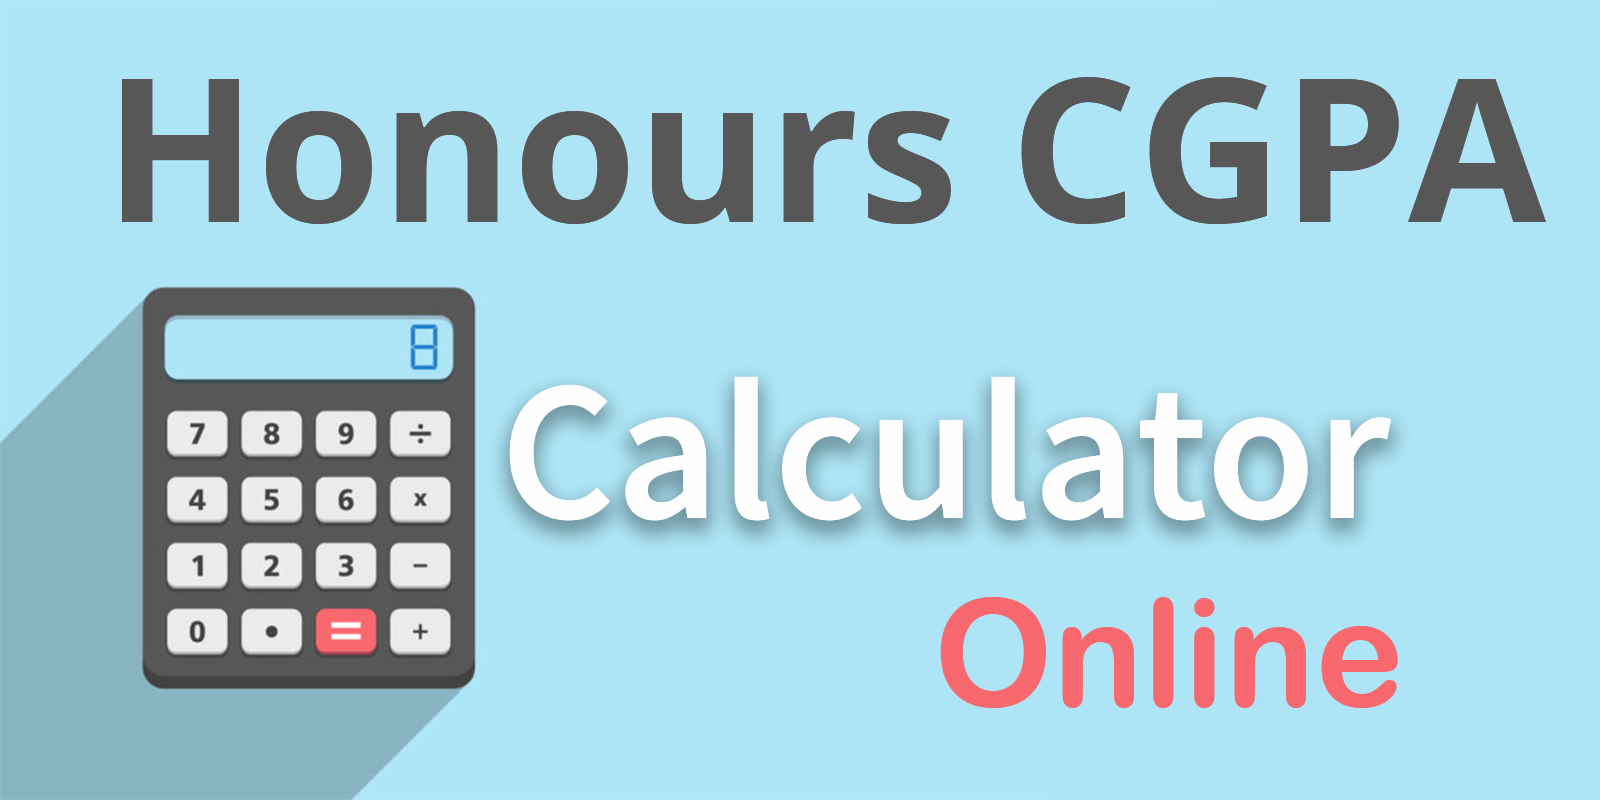 Honours CGPA Calculator Online